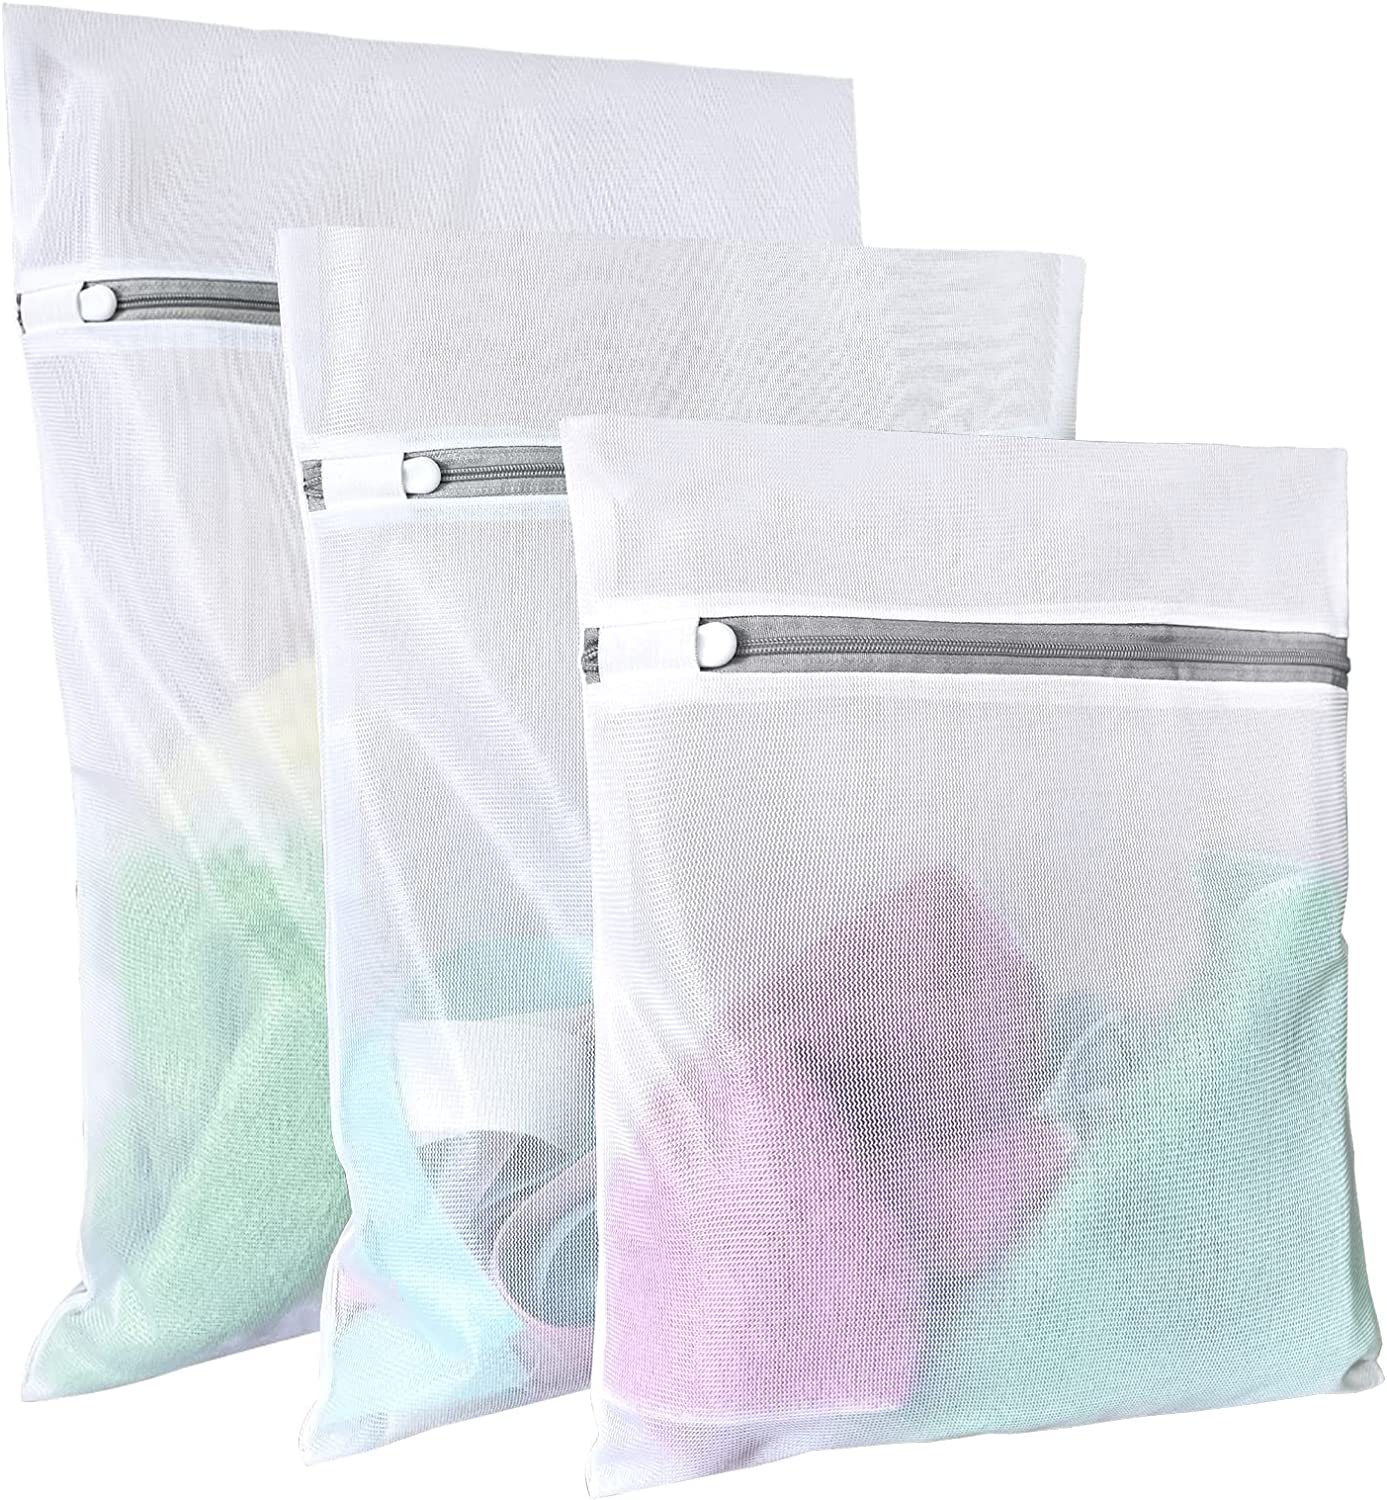 6 Pieces Bra Washing Bag Mesh Wash Bag Laundry Bags Lingerie Bag Underwear